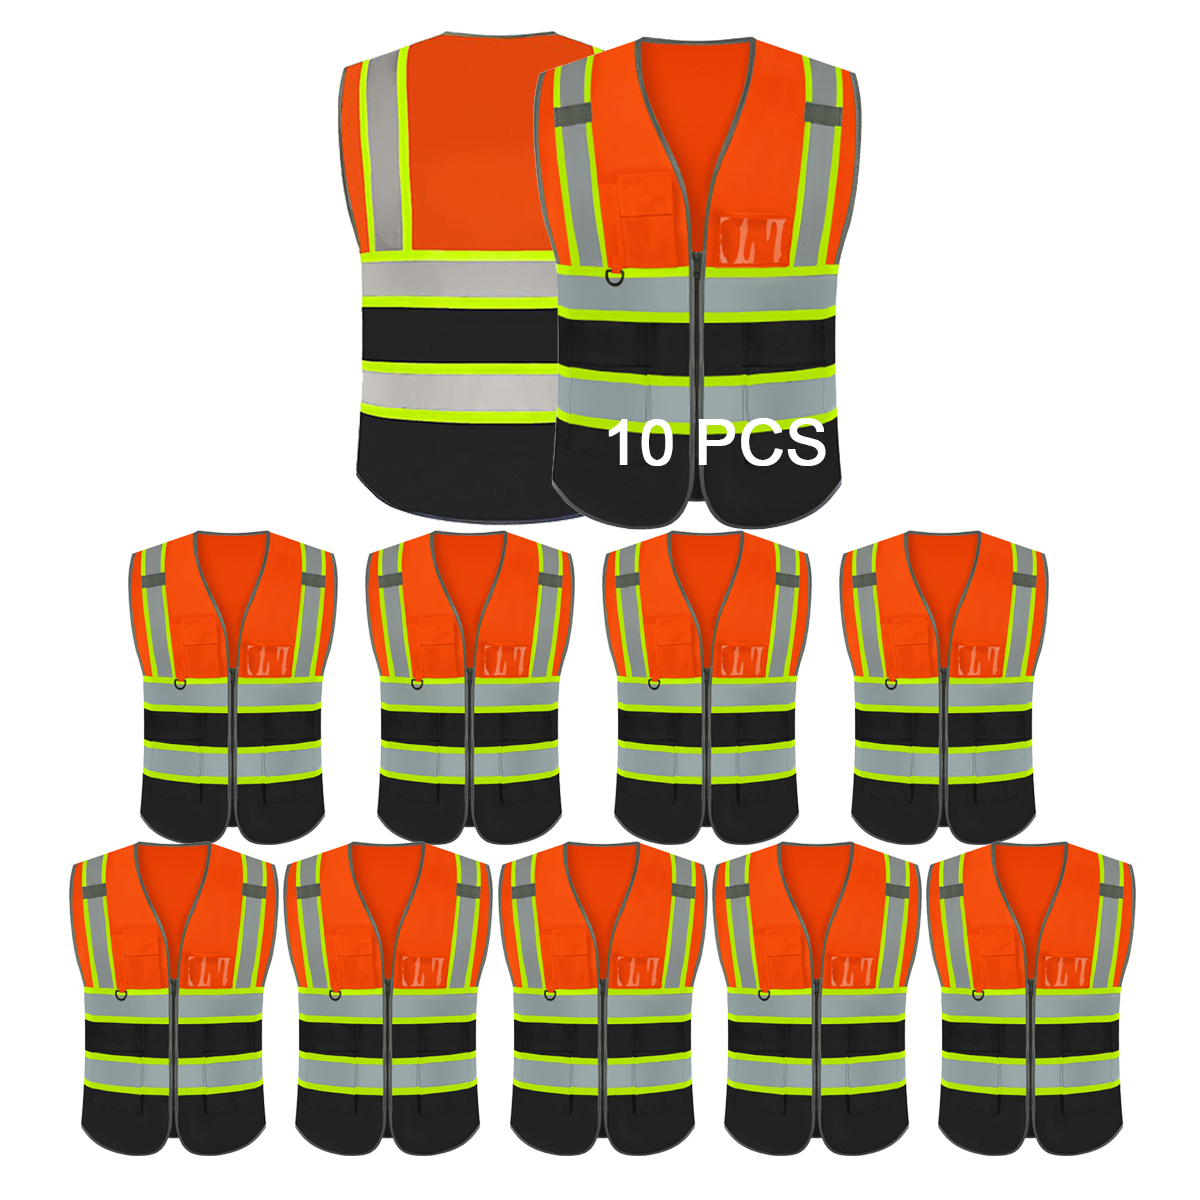 10PCS vest orange and black